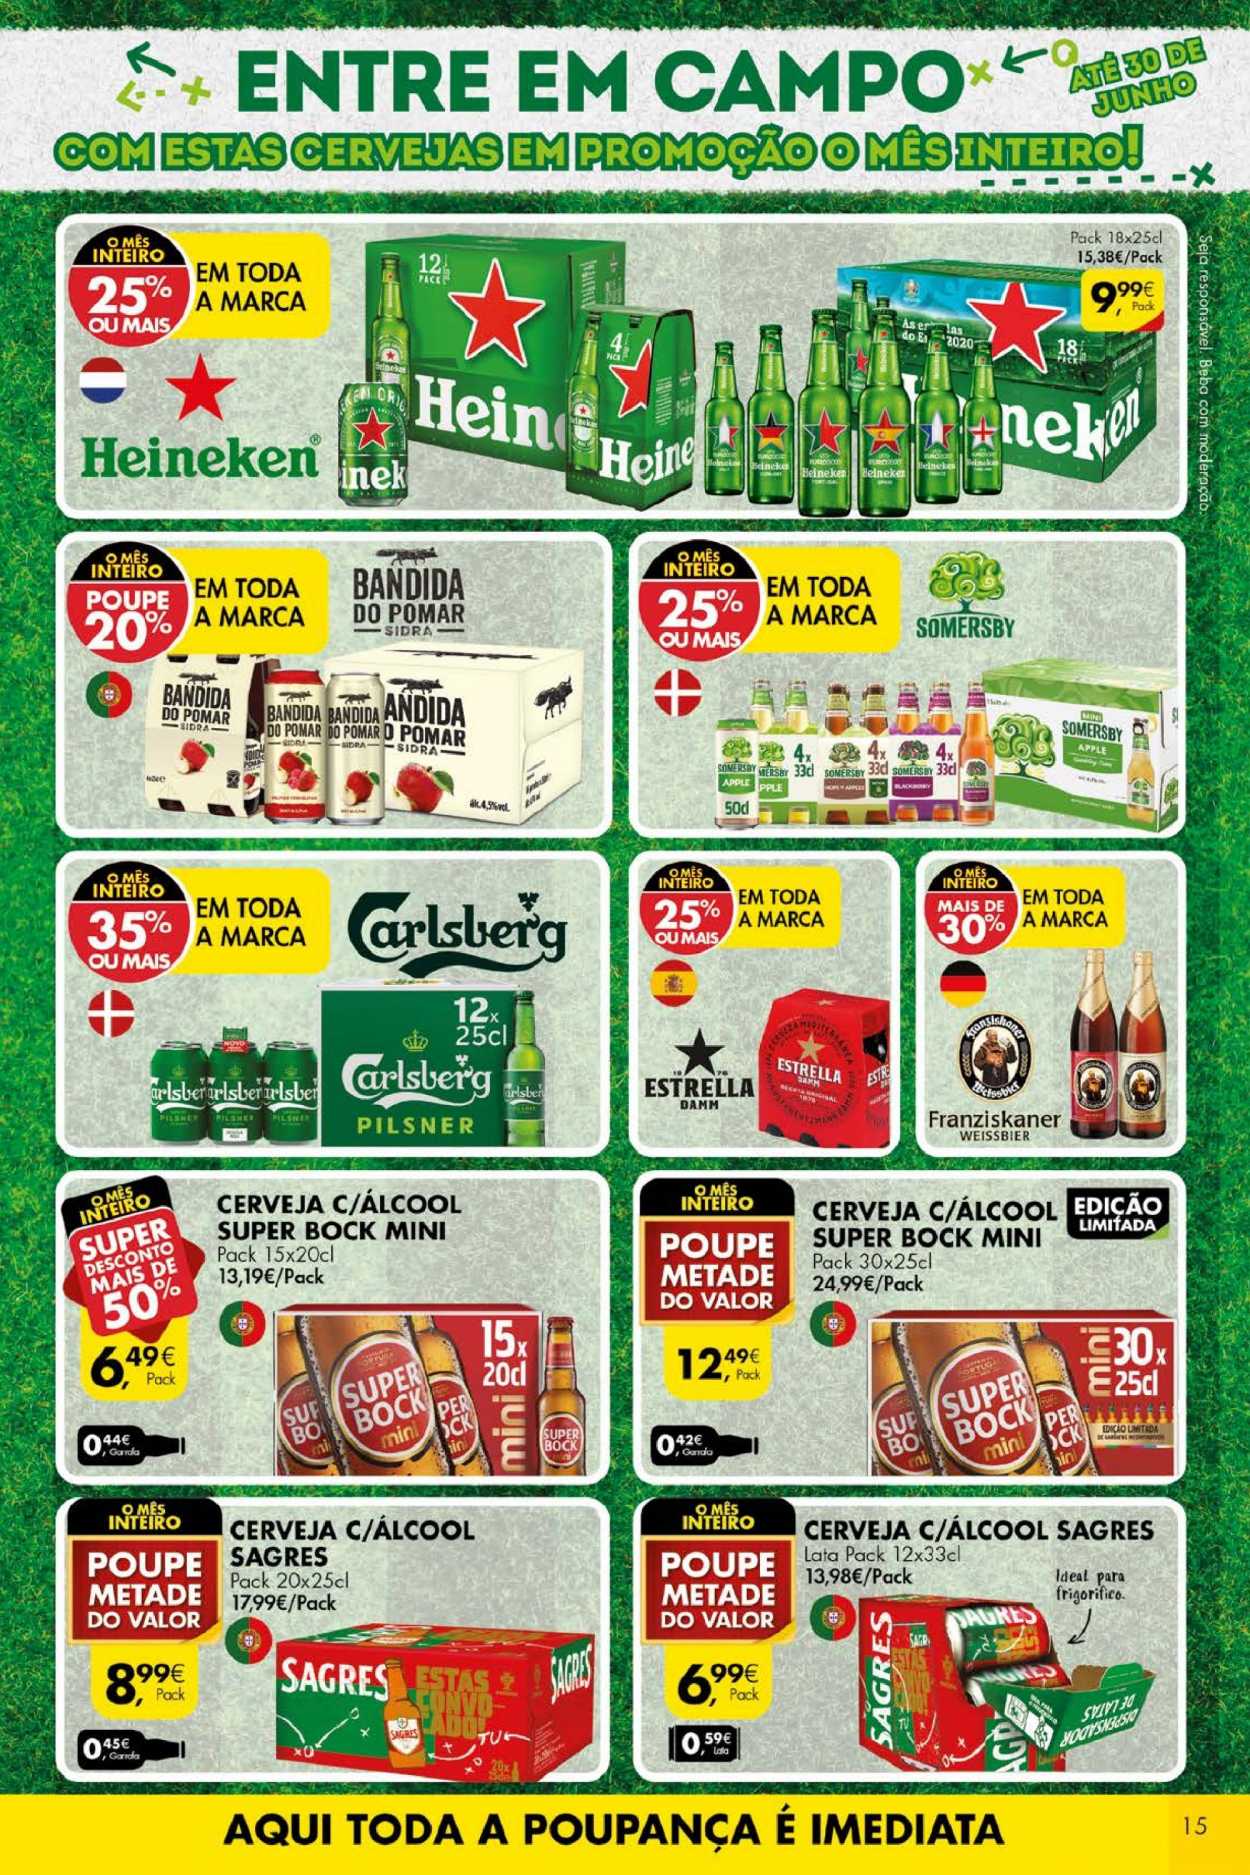 thumbnail - Folheto Pingo Doce - 15.6.2021 - 21.6.2021 - Produtos em promoção - Heineken, Weissbier, Sagres, Super Bock, sidra, Apple. Página 15.